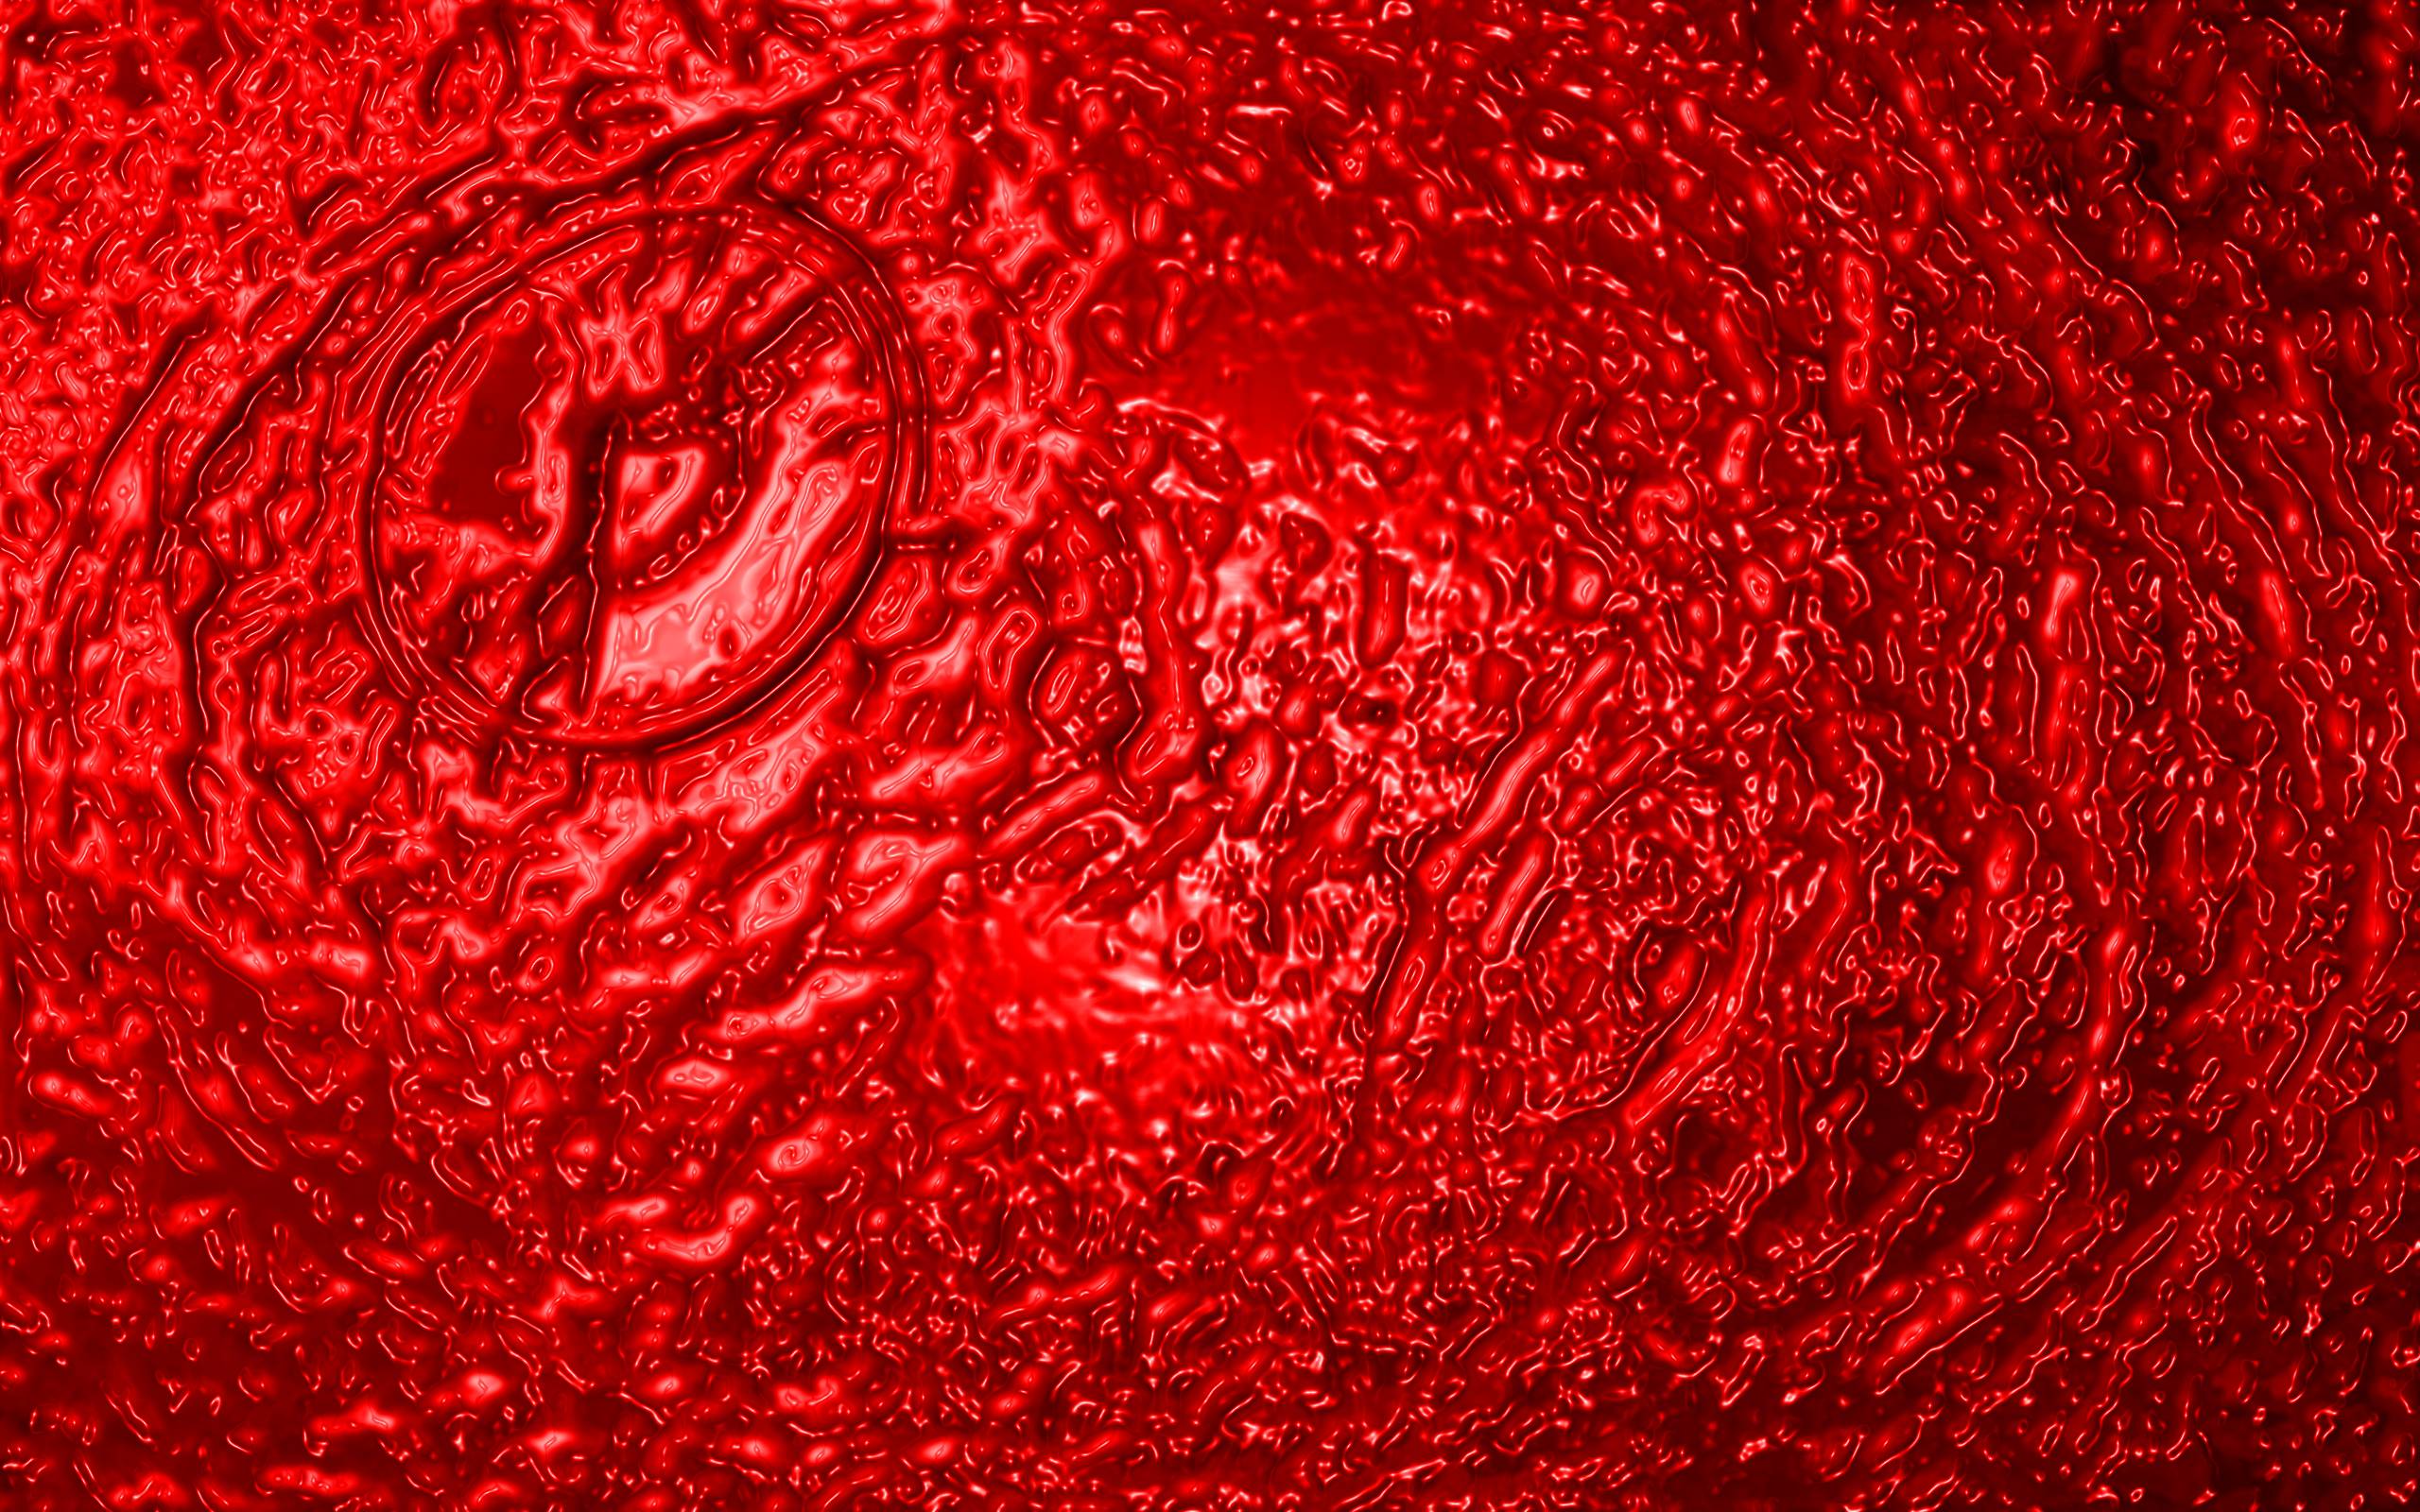 Red And Black Wallpaper 120 206516 Image HD Wallpaper. Wallfoy.com